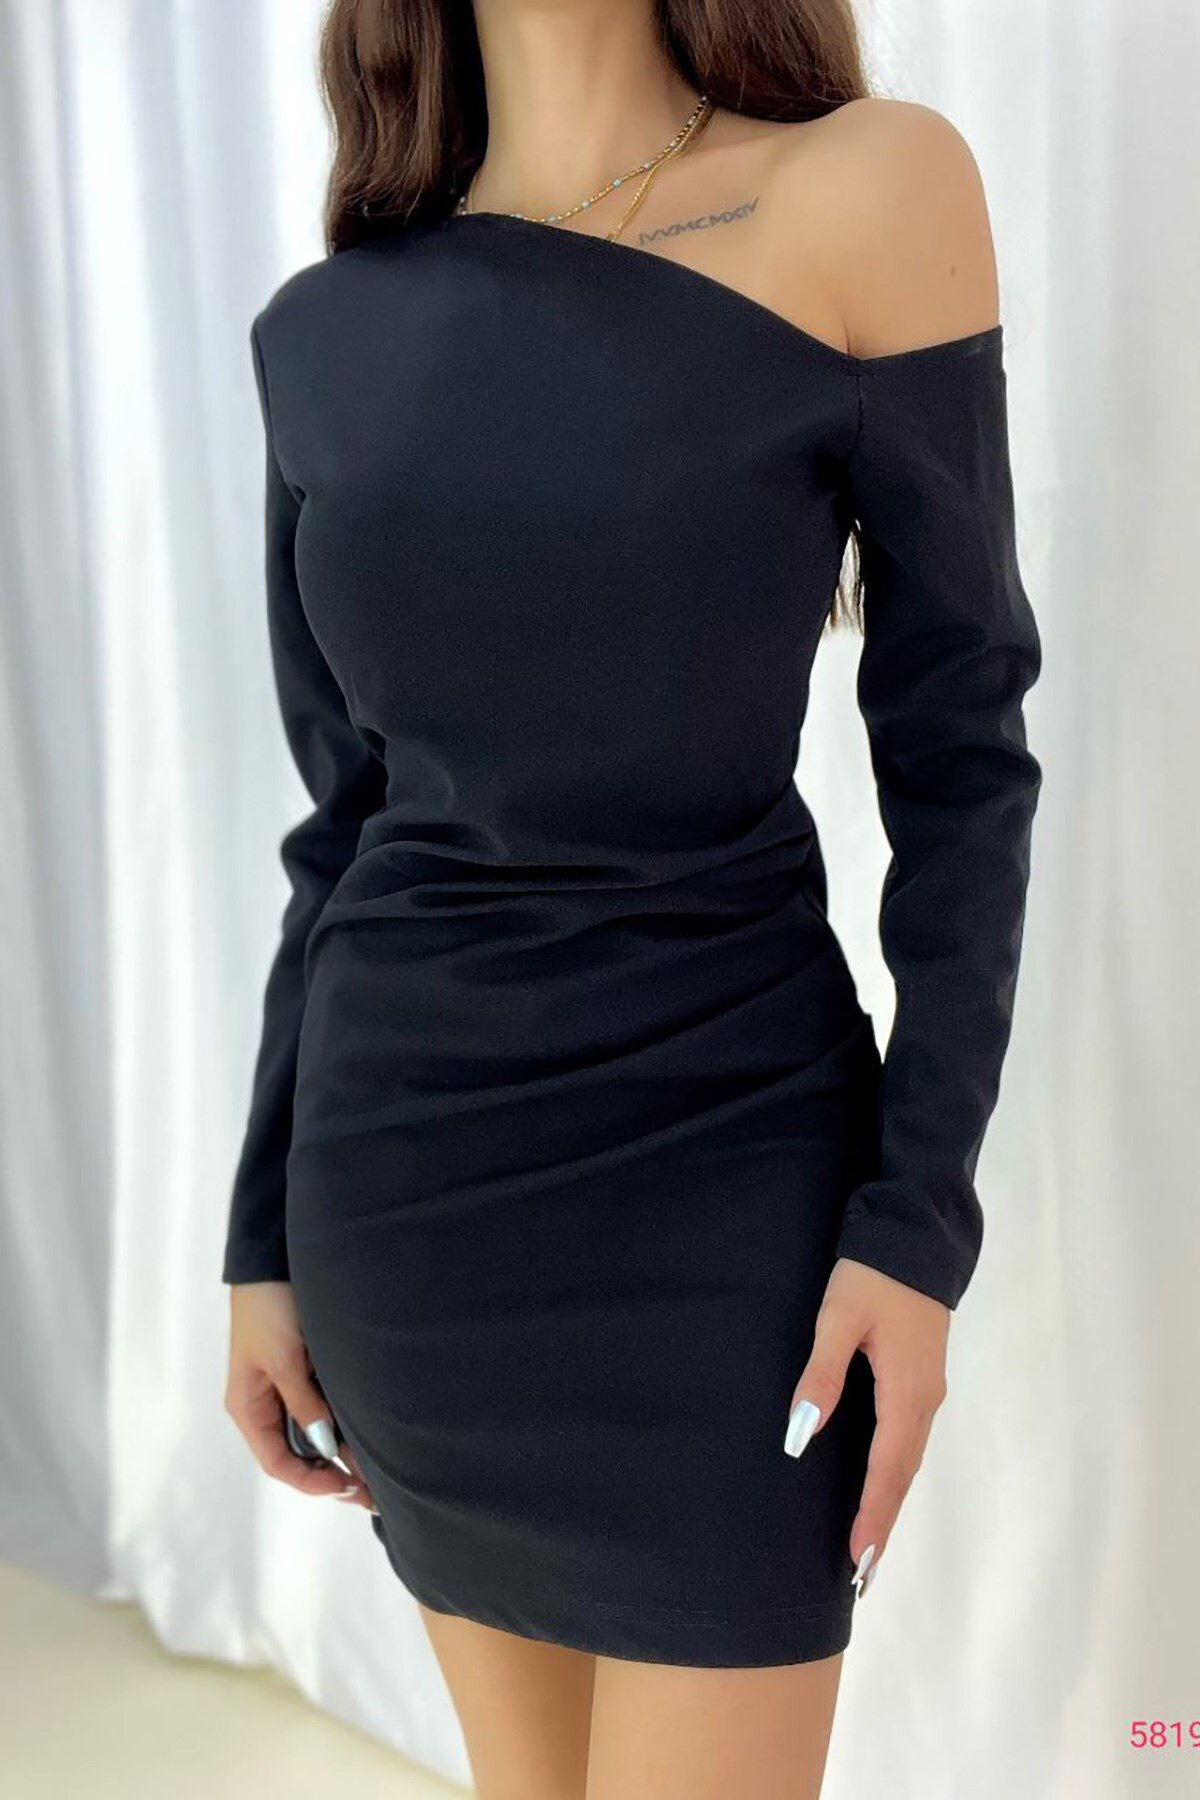 Deafox Siyah Tek Omuzlu Açık Detay İthal Krep Kumaş Uzun Kollu Mini Elbise